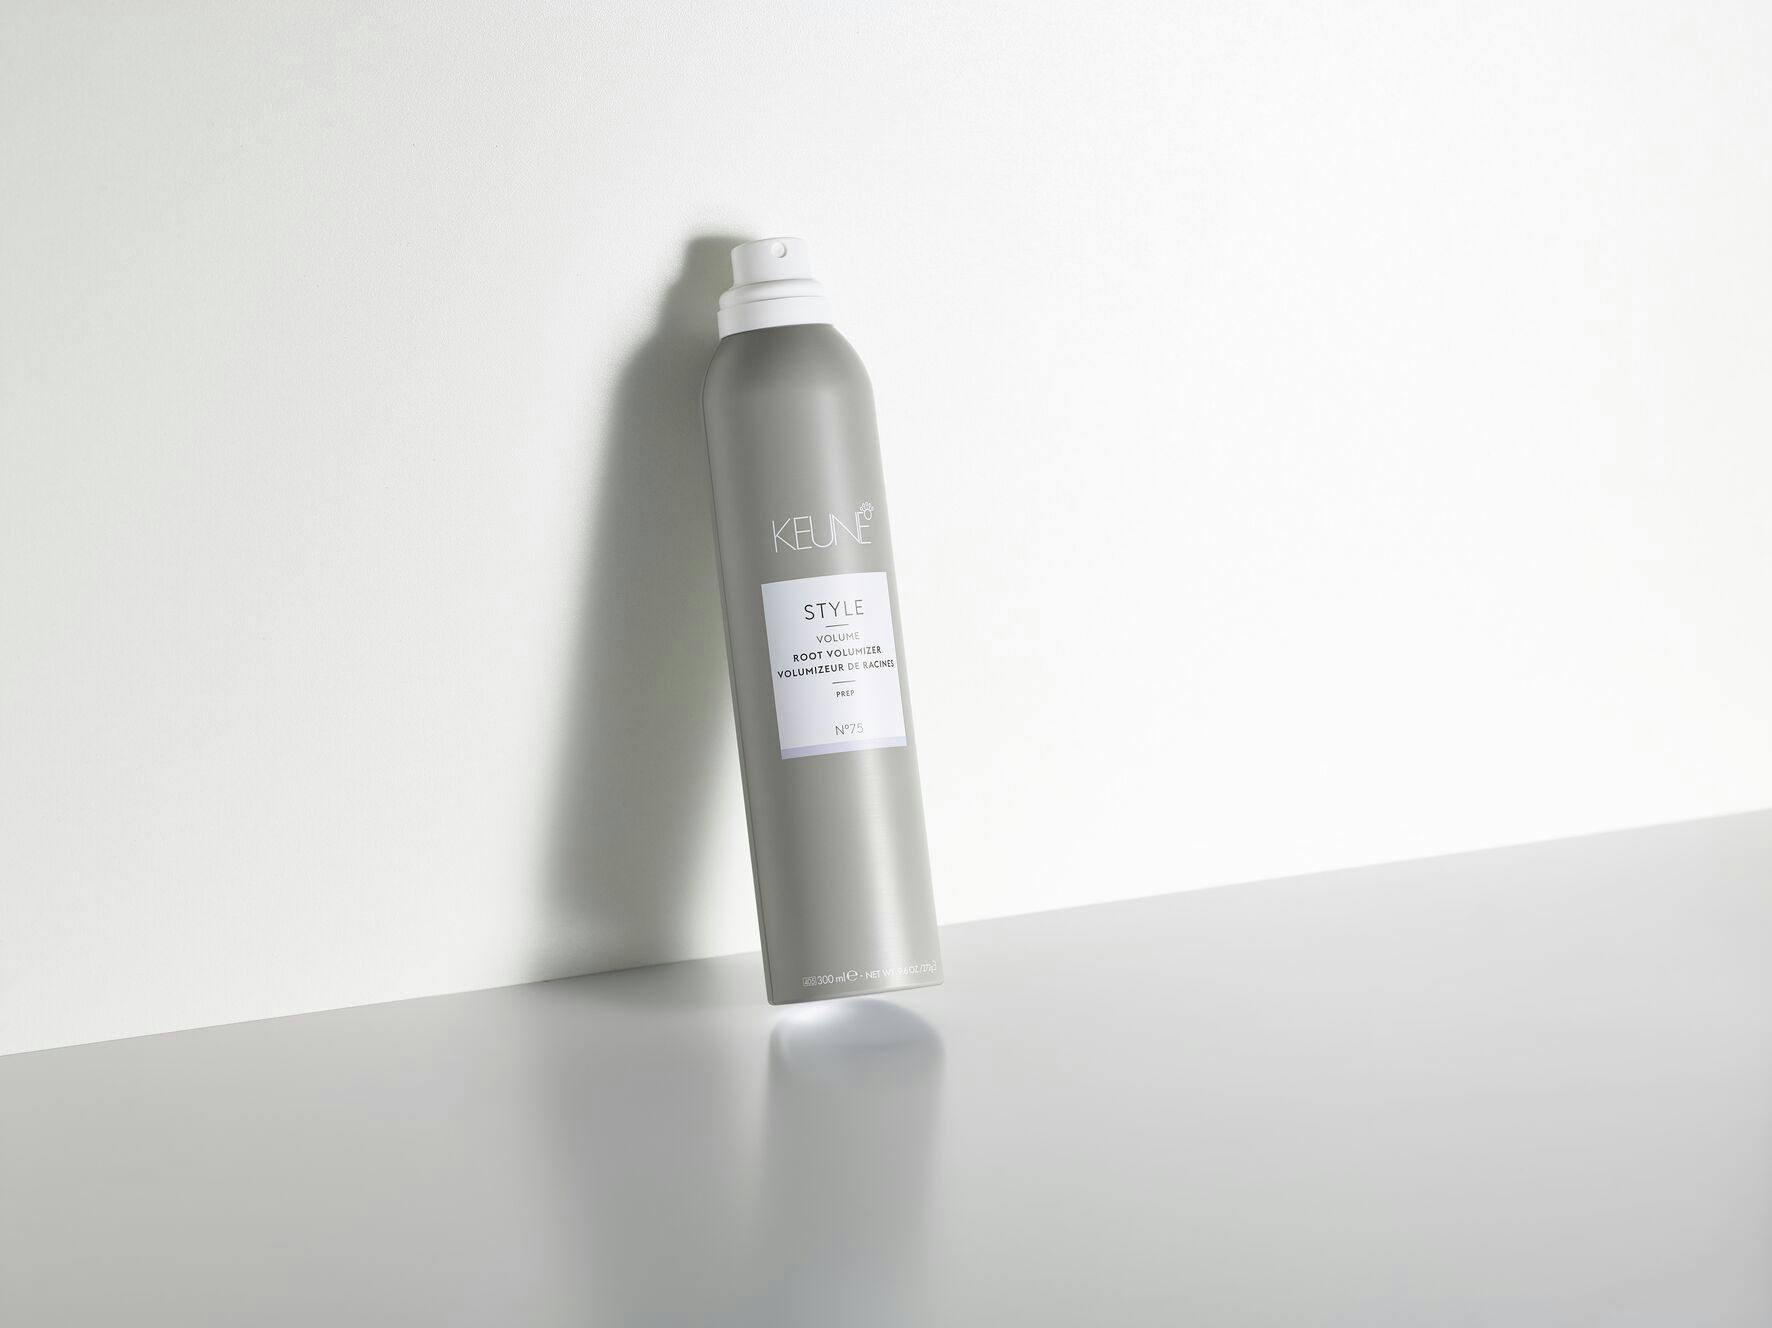 Image of spray bottle Keune Style Root Volumizer